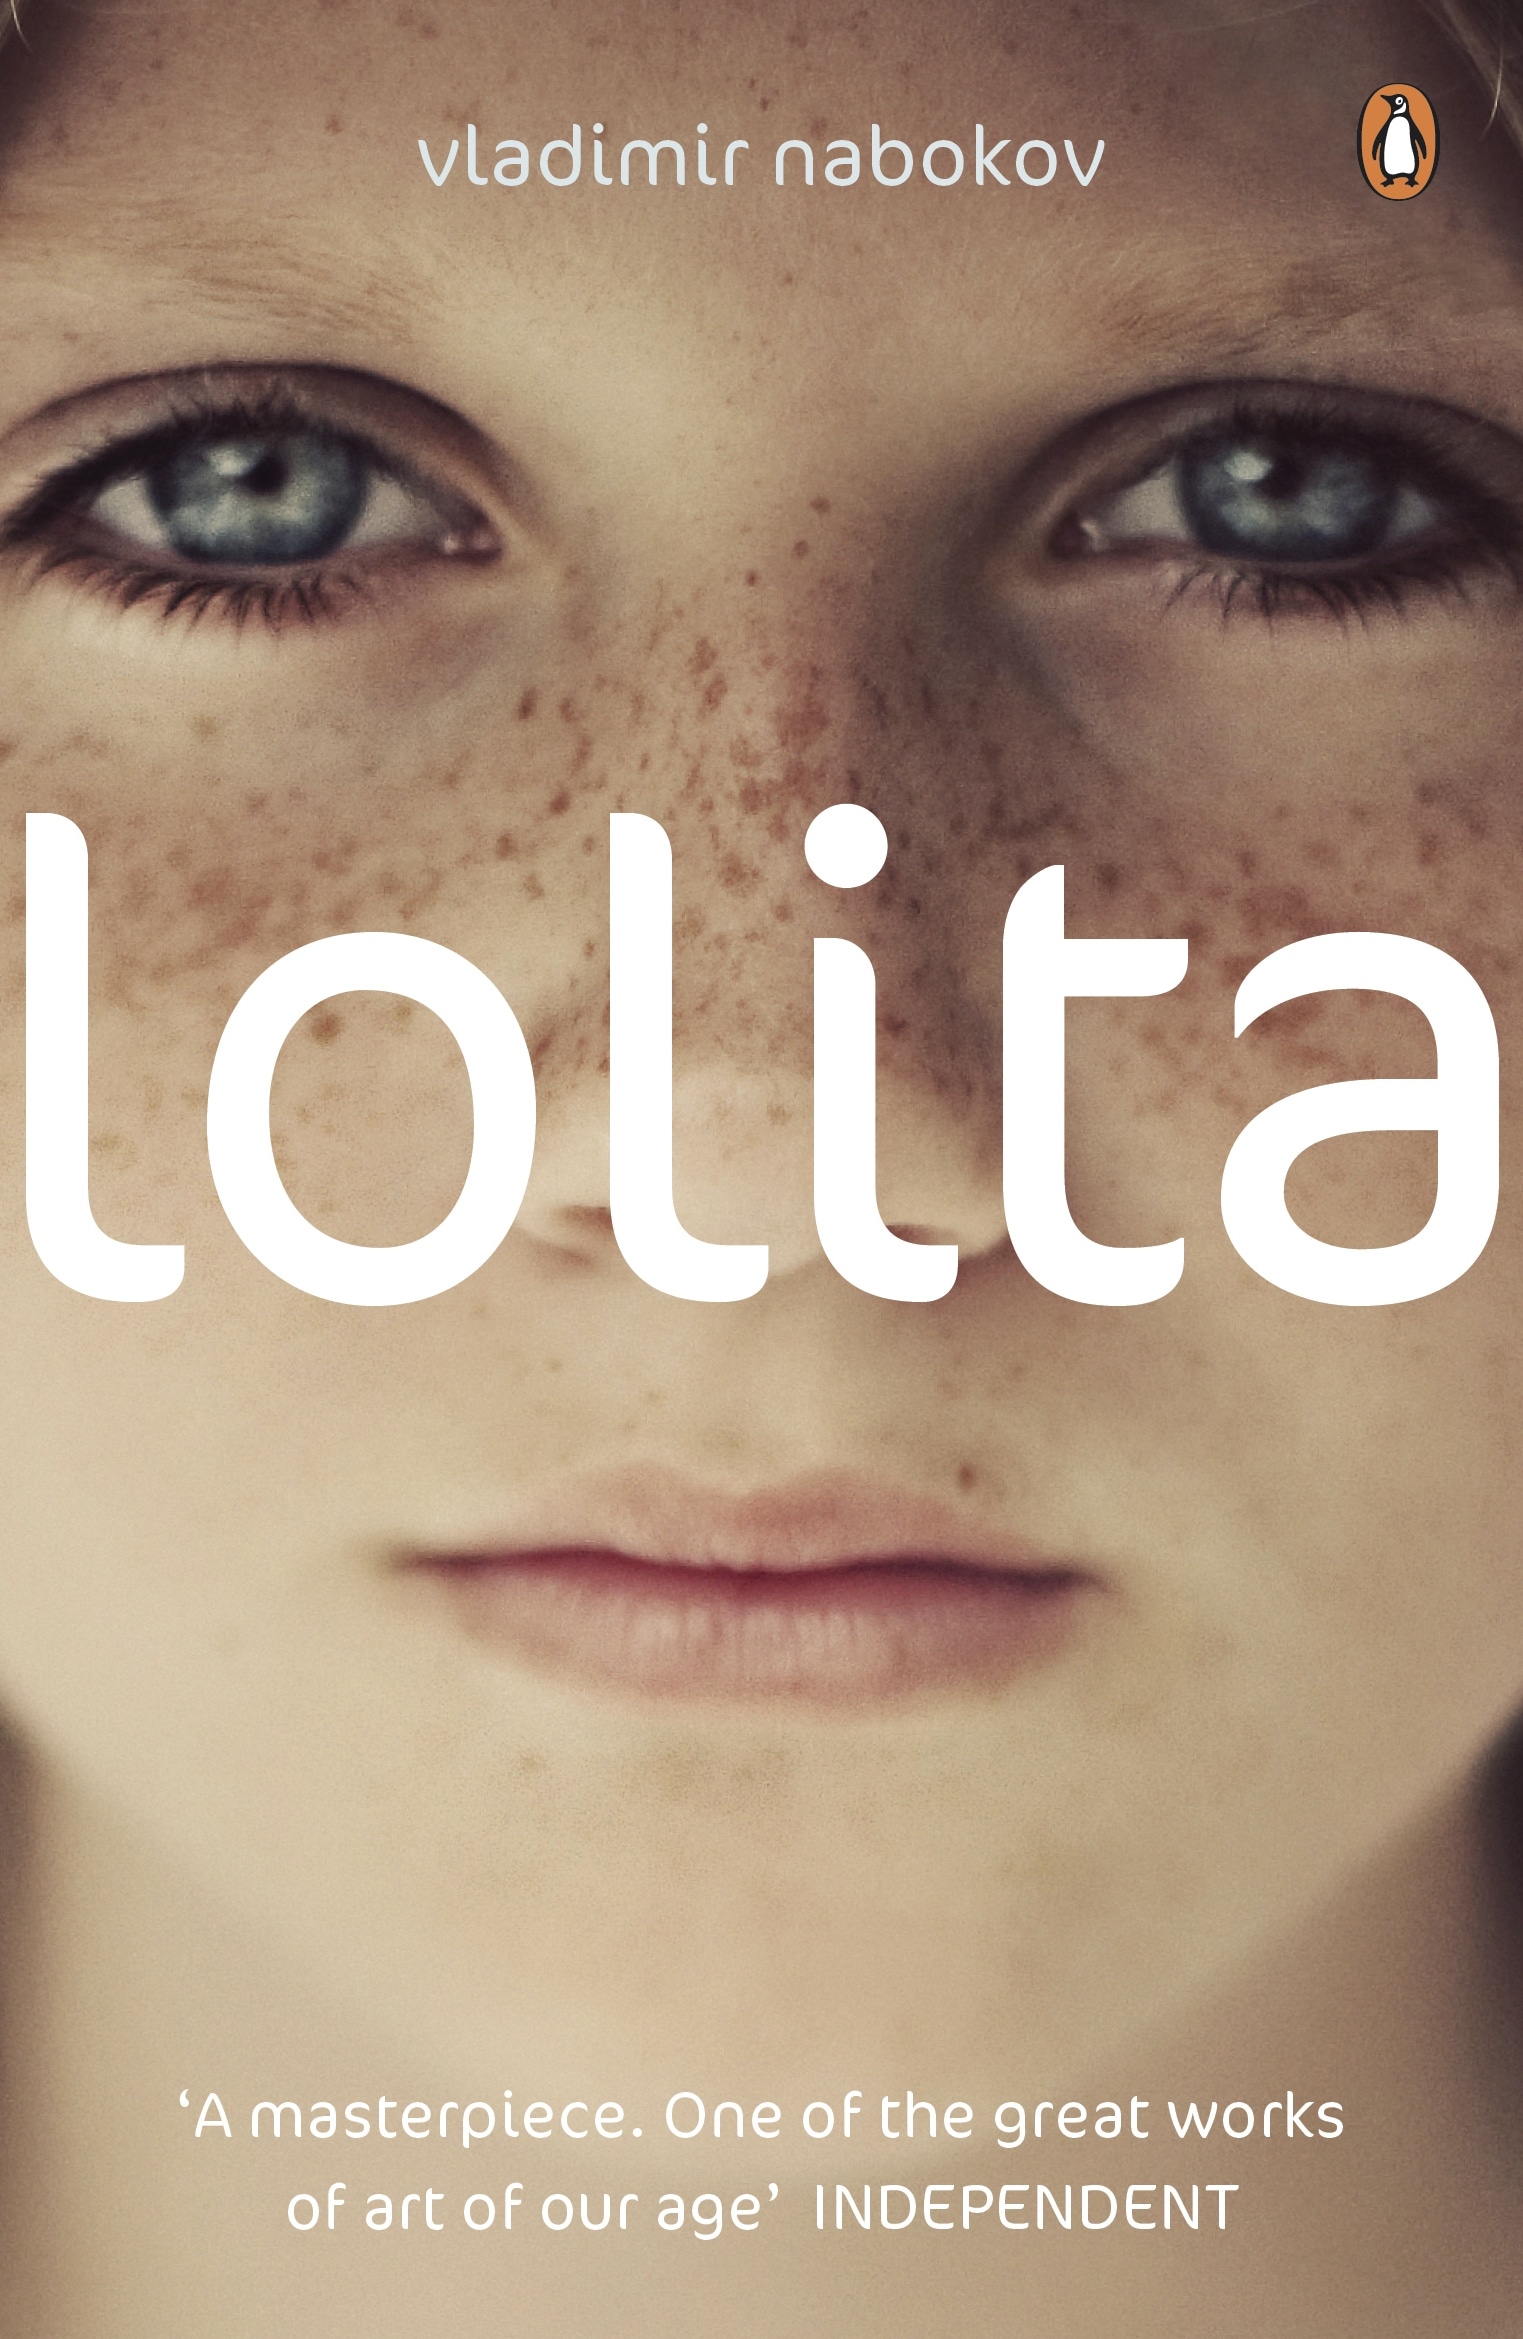 Book “Lolita” by Vladimir Nabokov — August 25, 2011